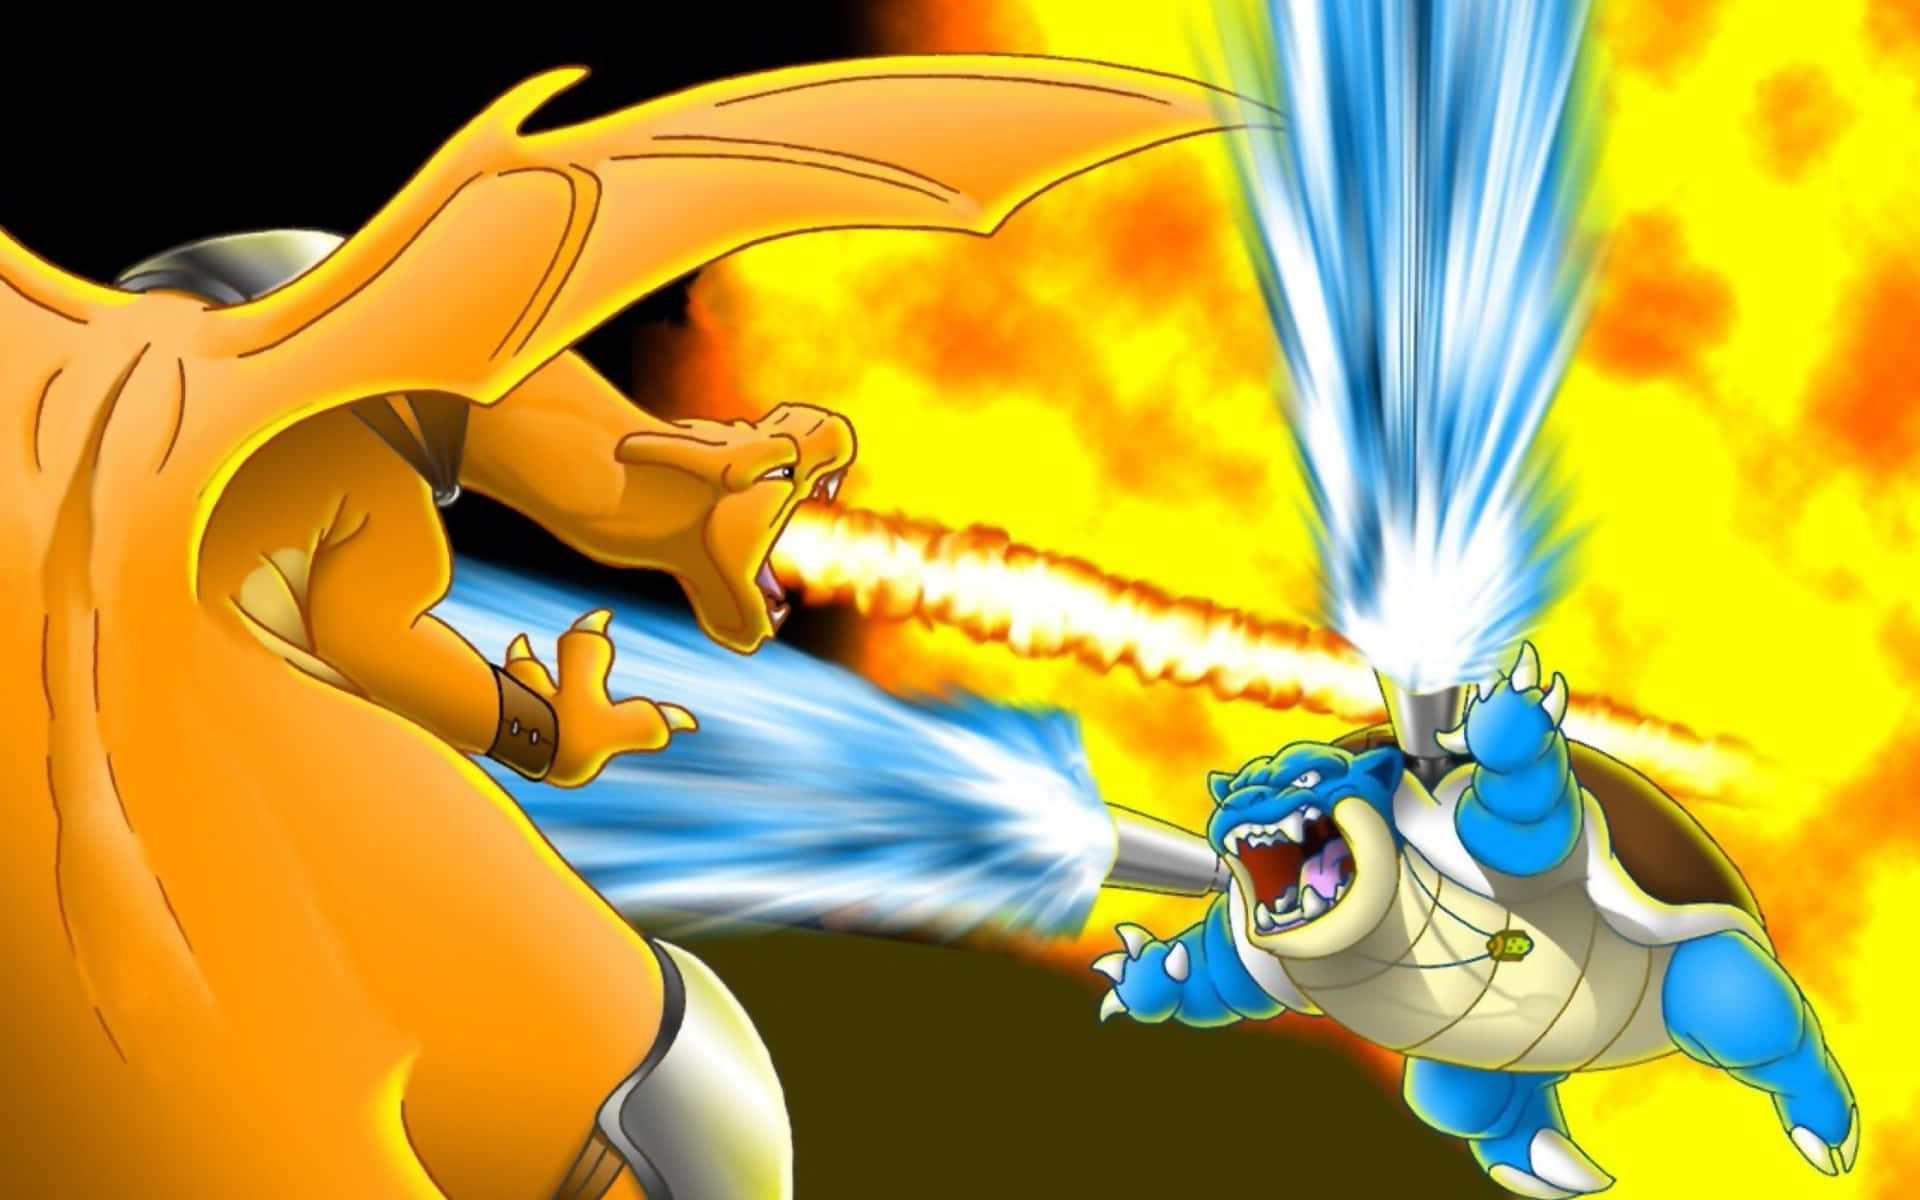 Bakgrundsbildmed Blastoise Och Charizard I En Pokemon-strid.